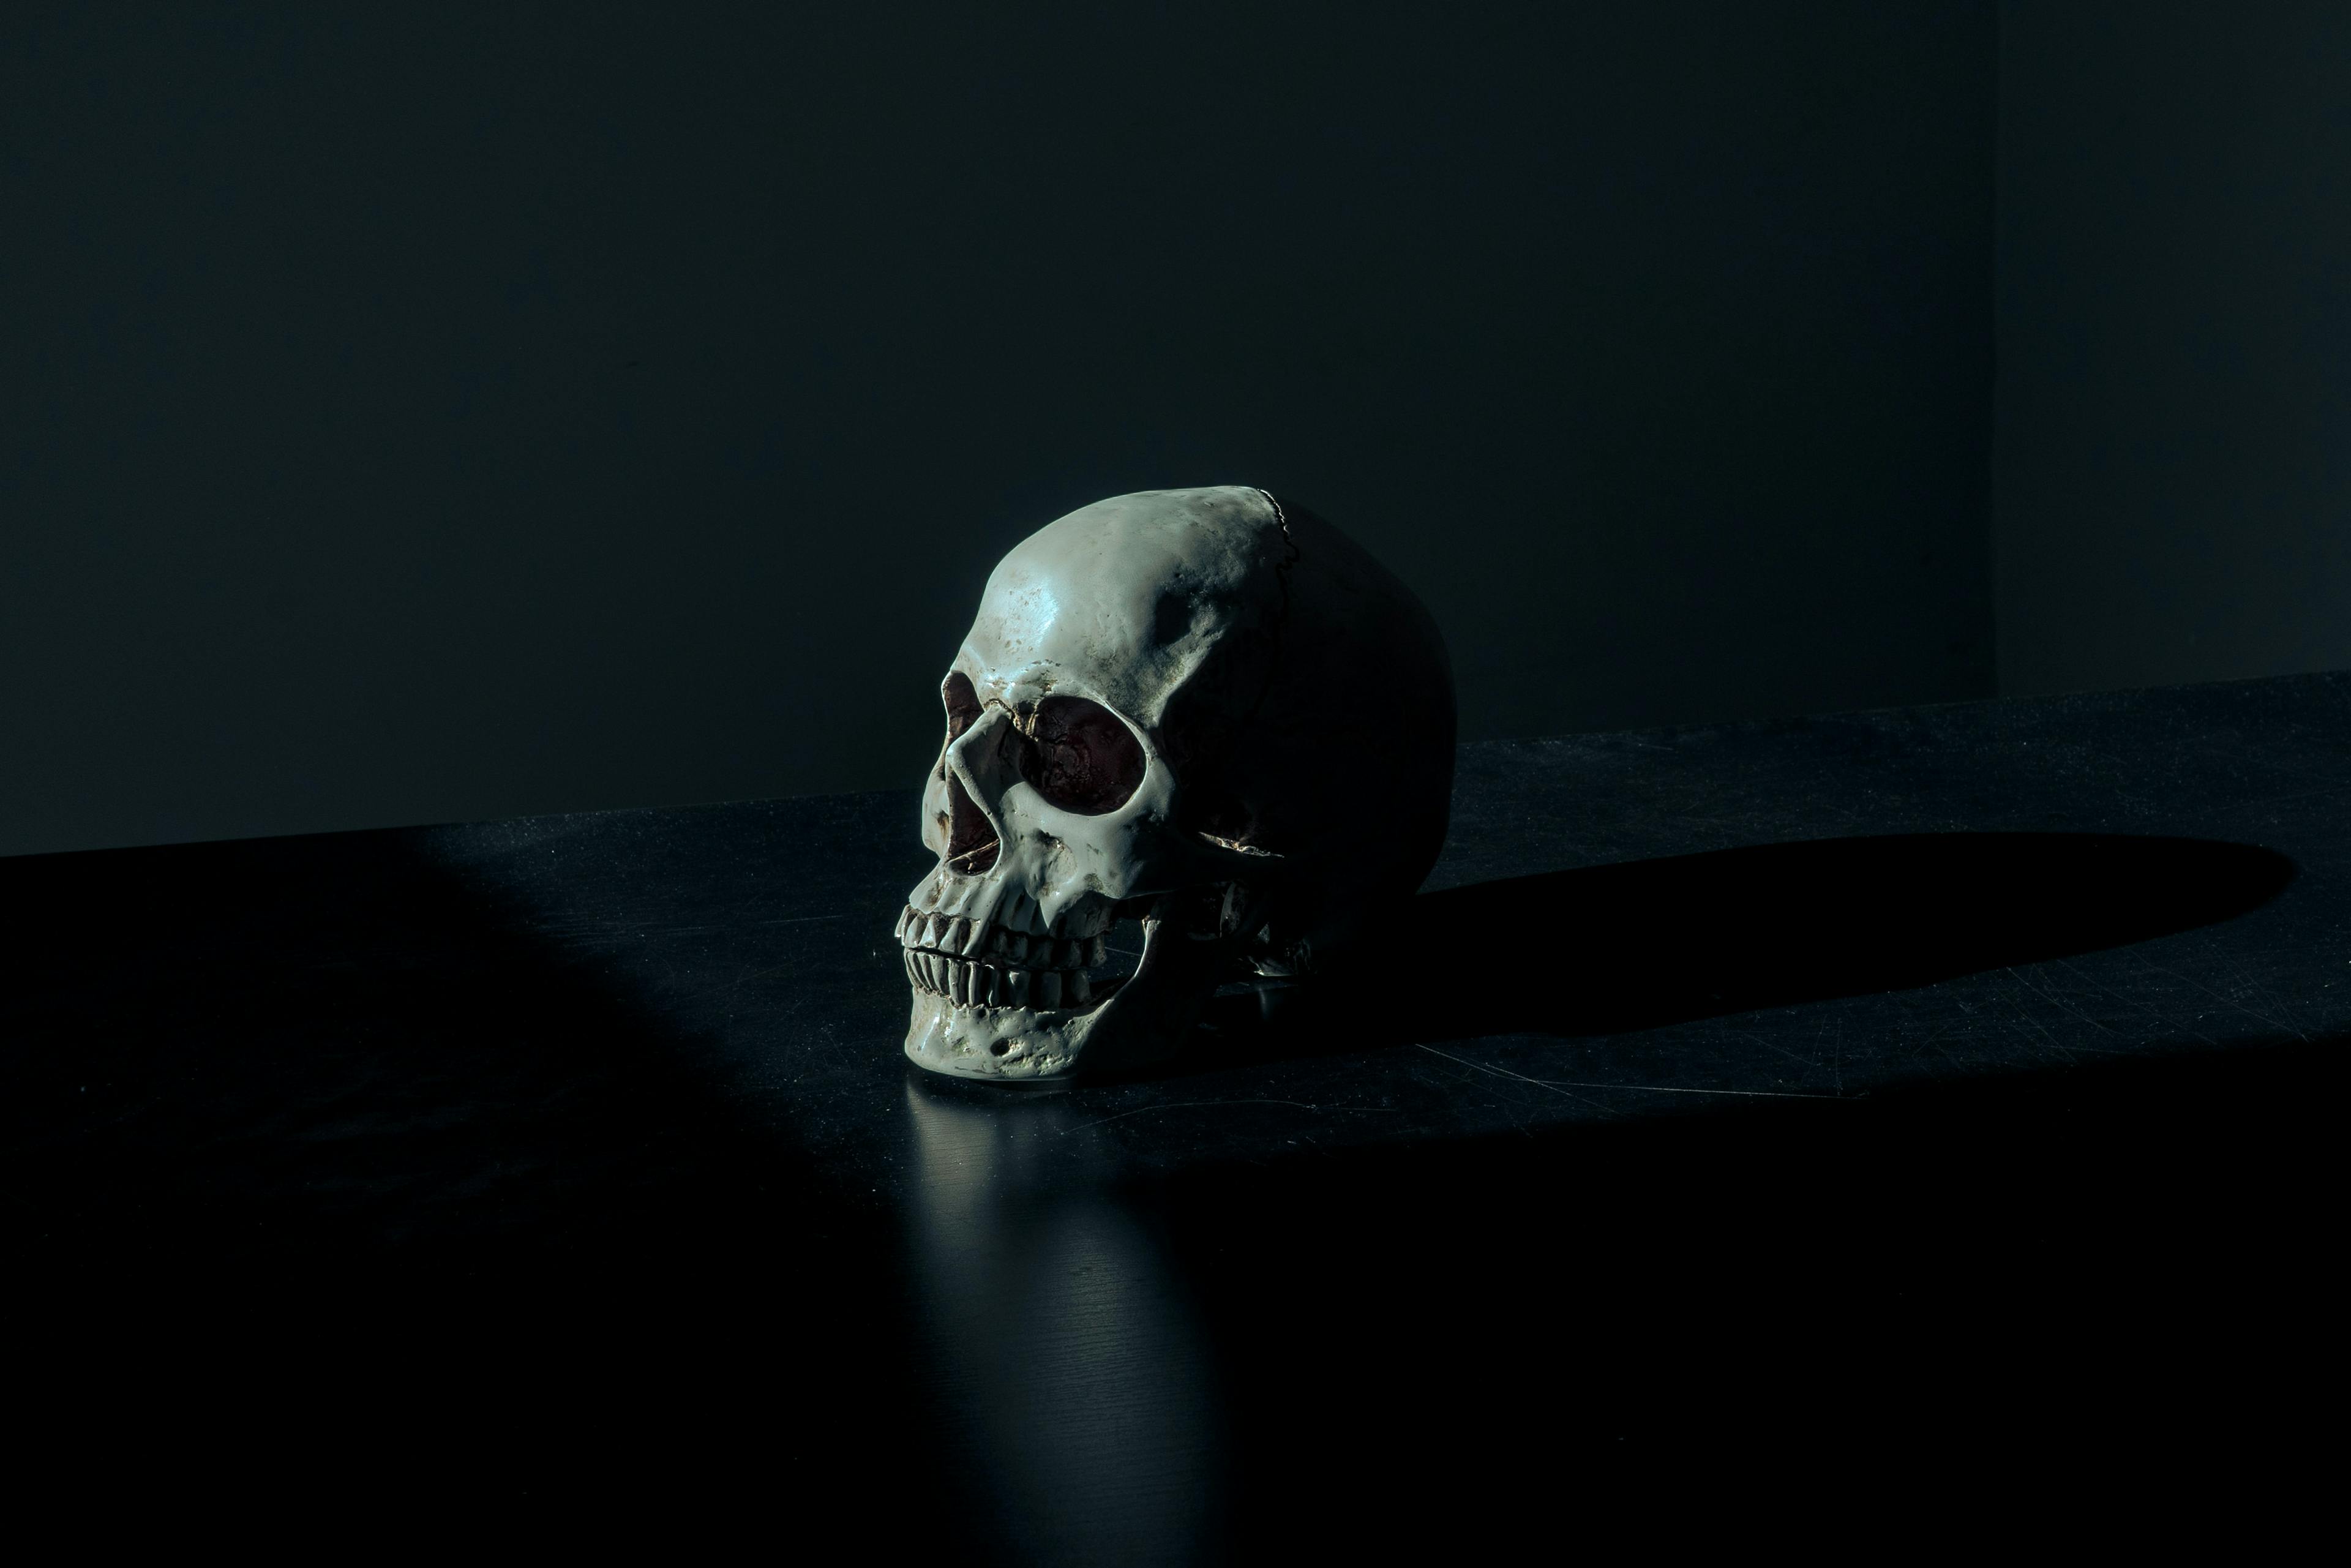 Skull on black reflective surface